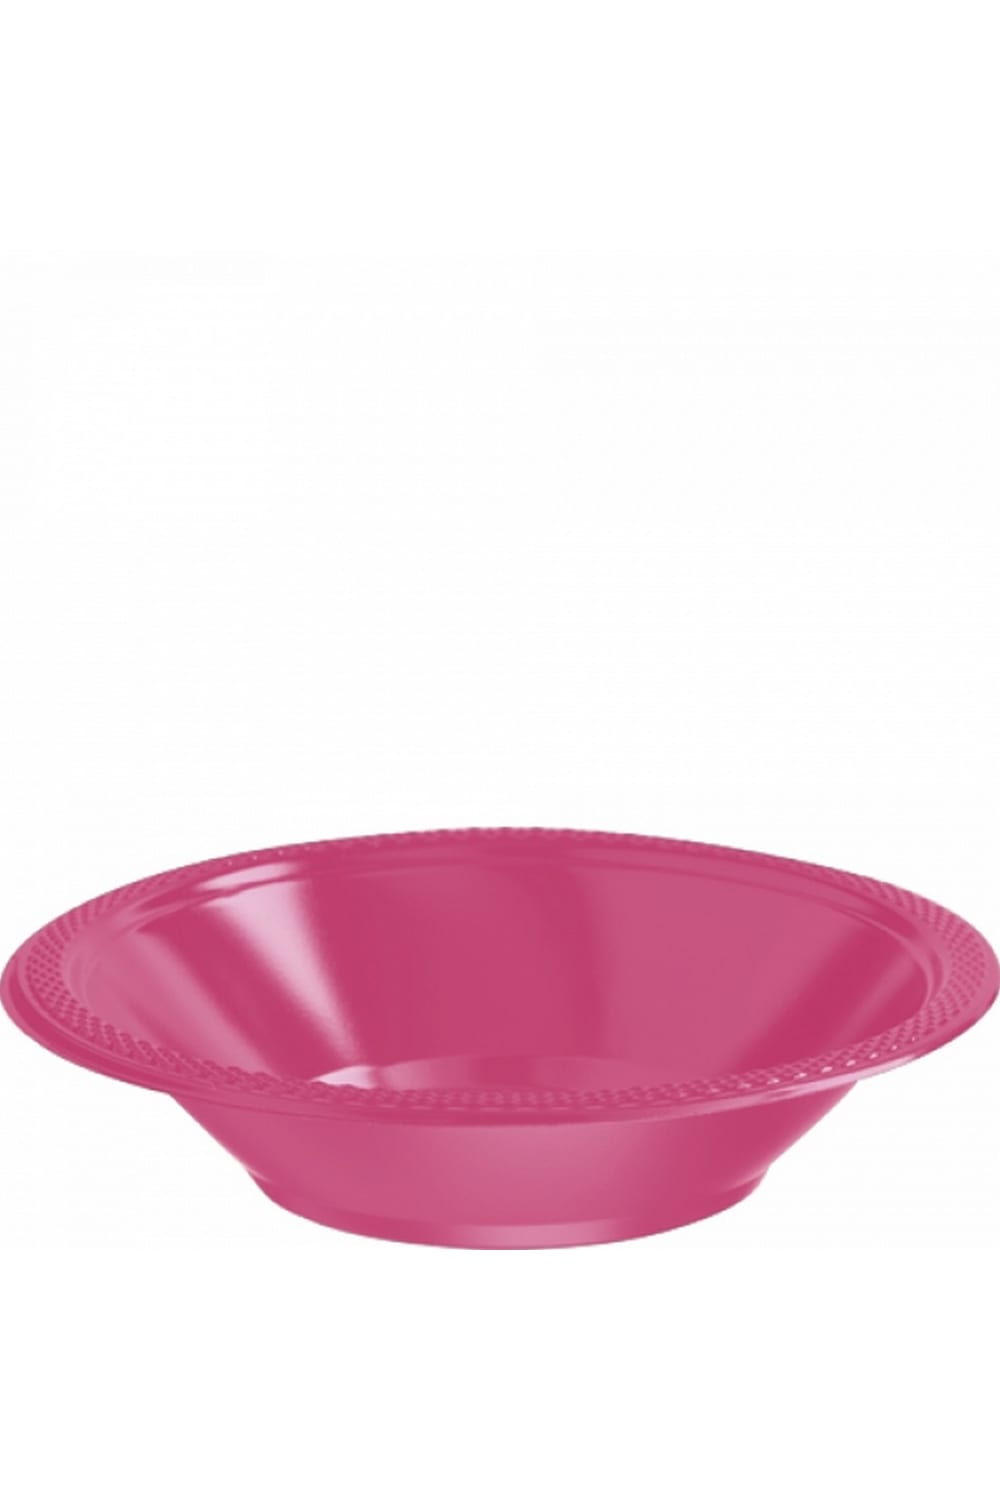 Amscan 12oz Solid Color Plastic Bowls (Pack Of 20) (Bright Pink) (12oz)